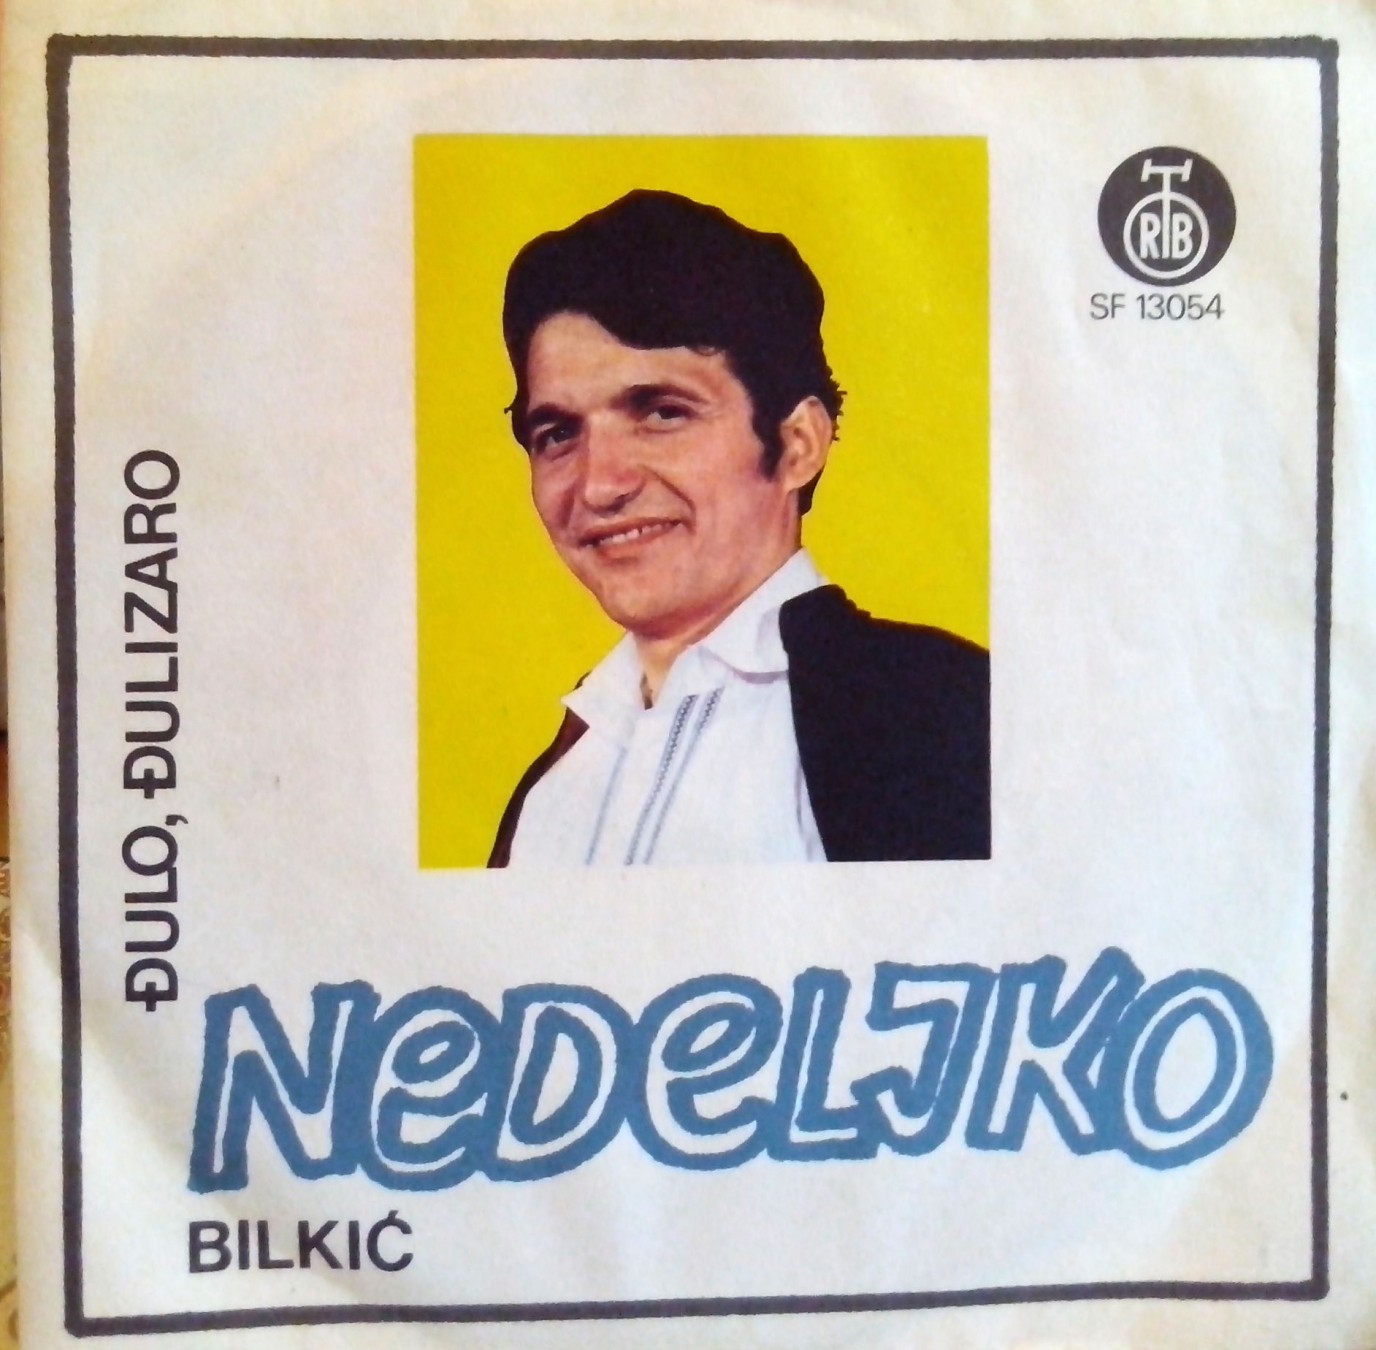 1973 Đulo, Đulizaro - Single